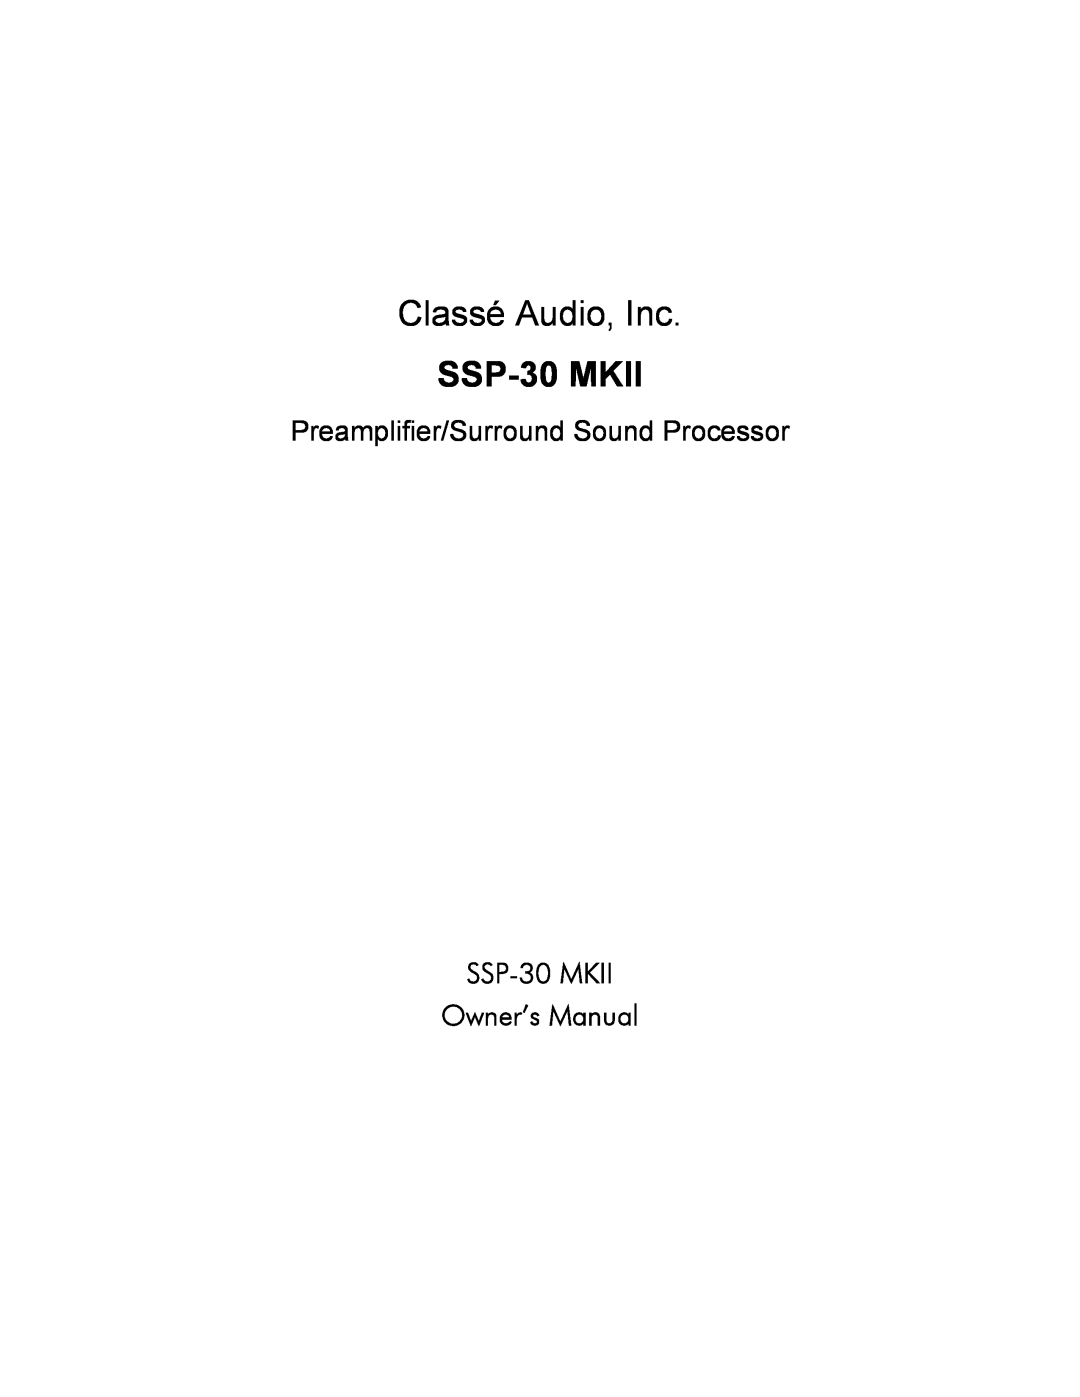 Classe Audio SSP-30 MKII owner manual Classé Audio, Inc, SSP-30MKII, Preamplifier/Surround Sound Processor 